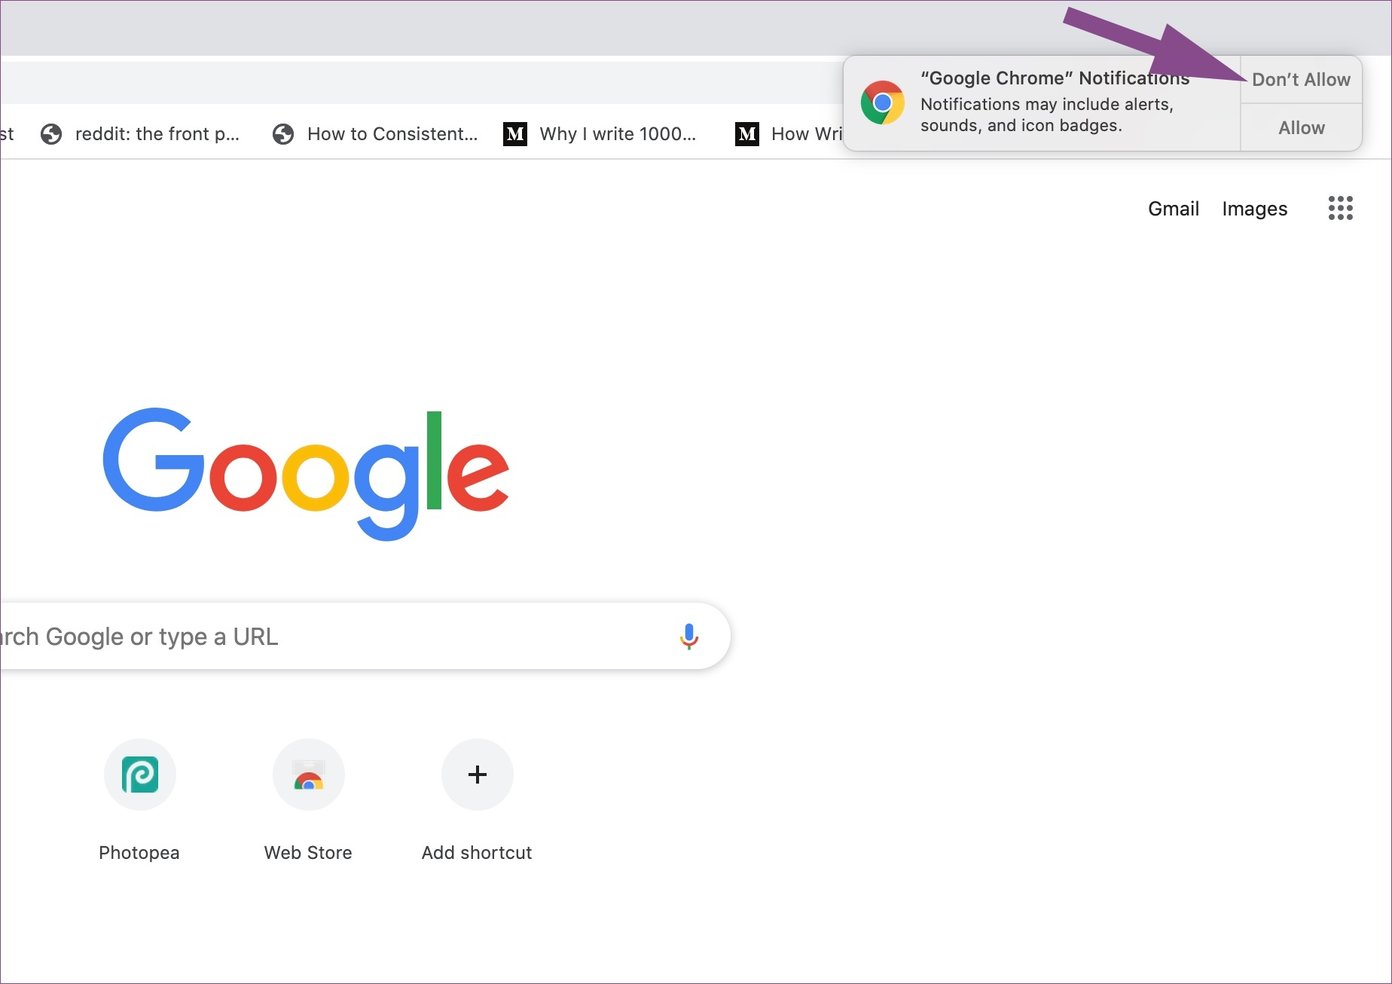 google chrome for mac pop up blocker